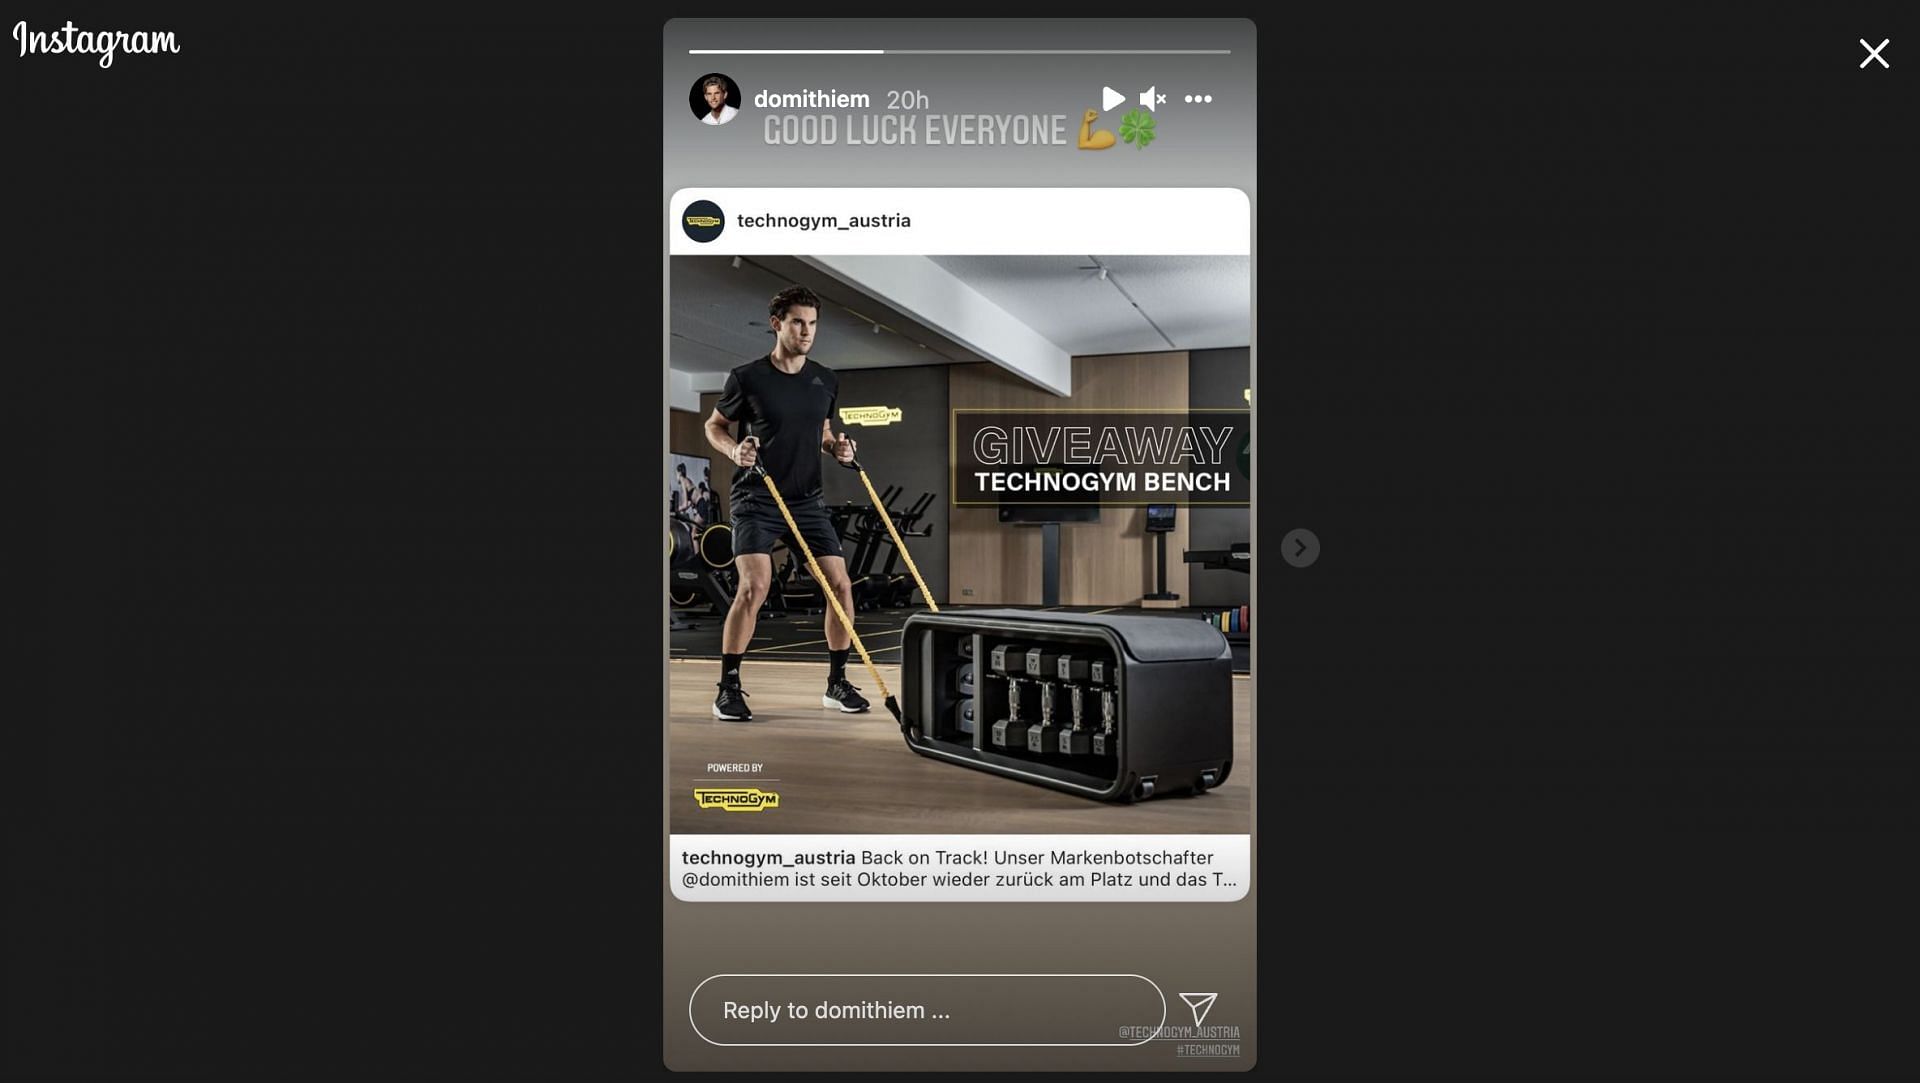 Dominic Thiem shares an Instagram Story advertising Technogym